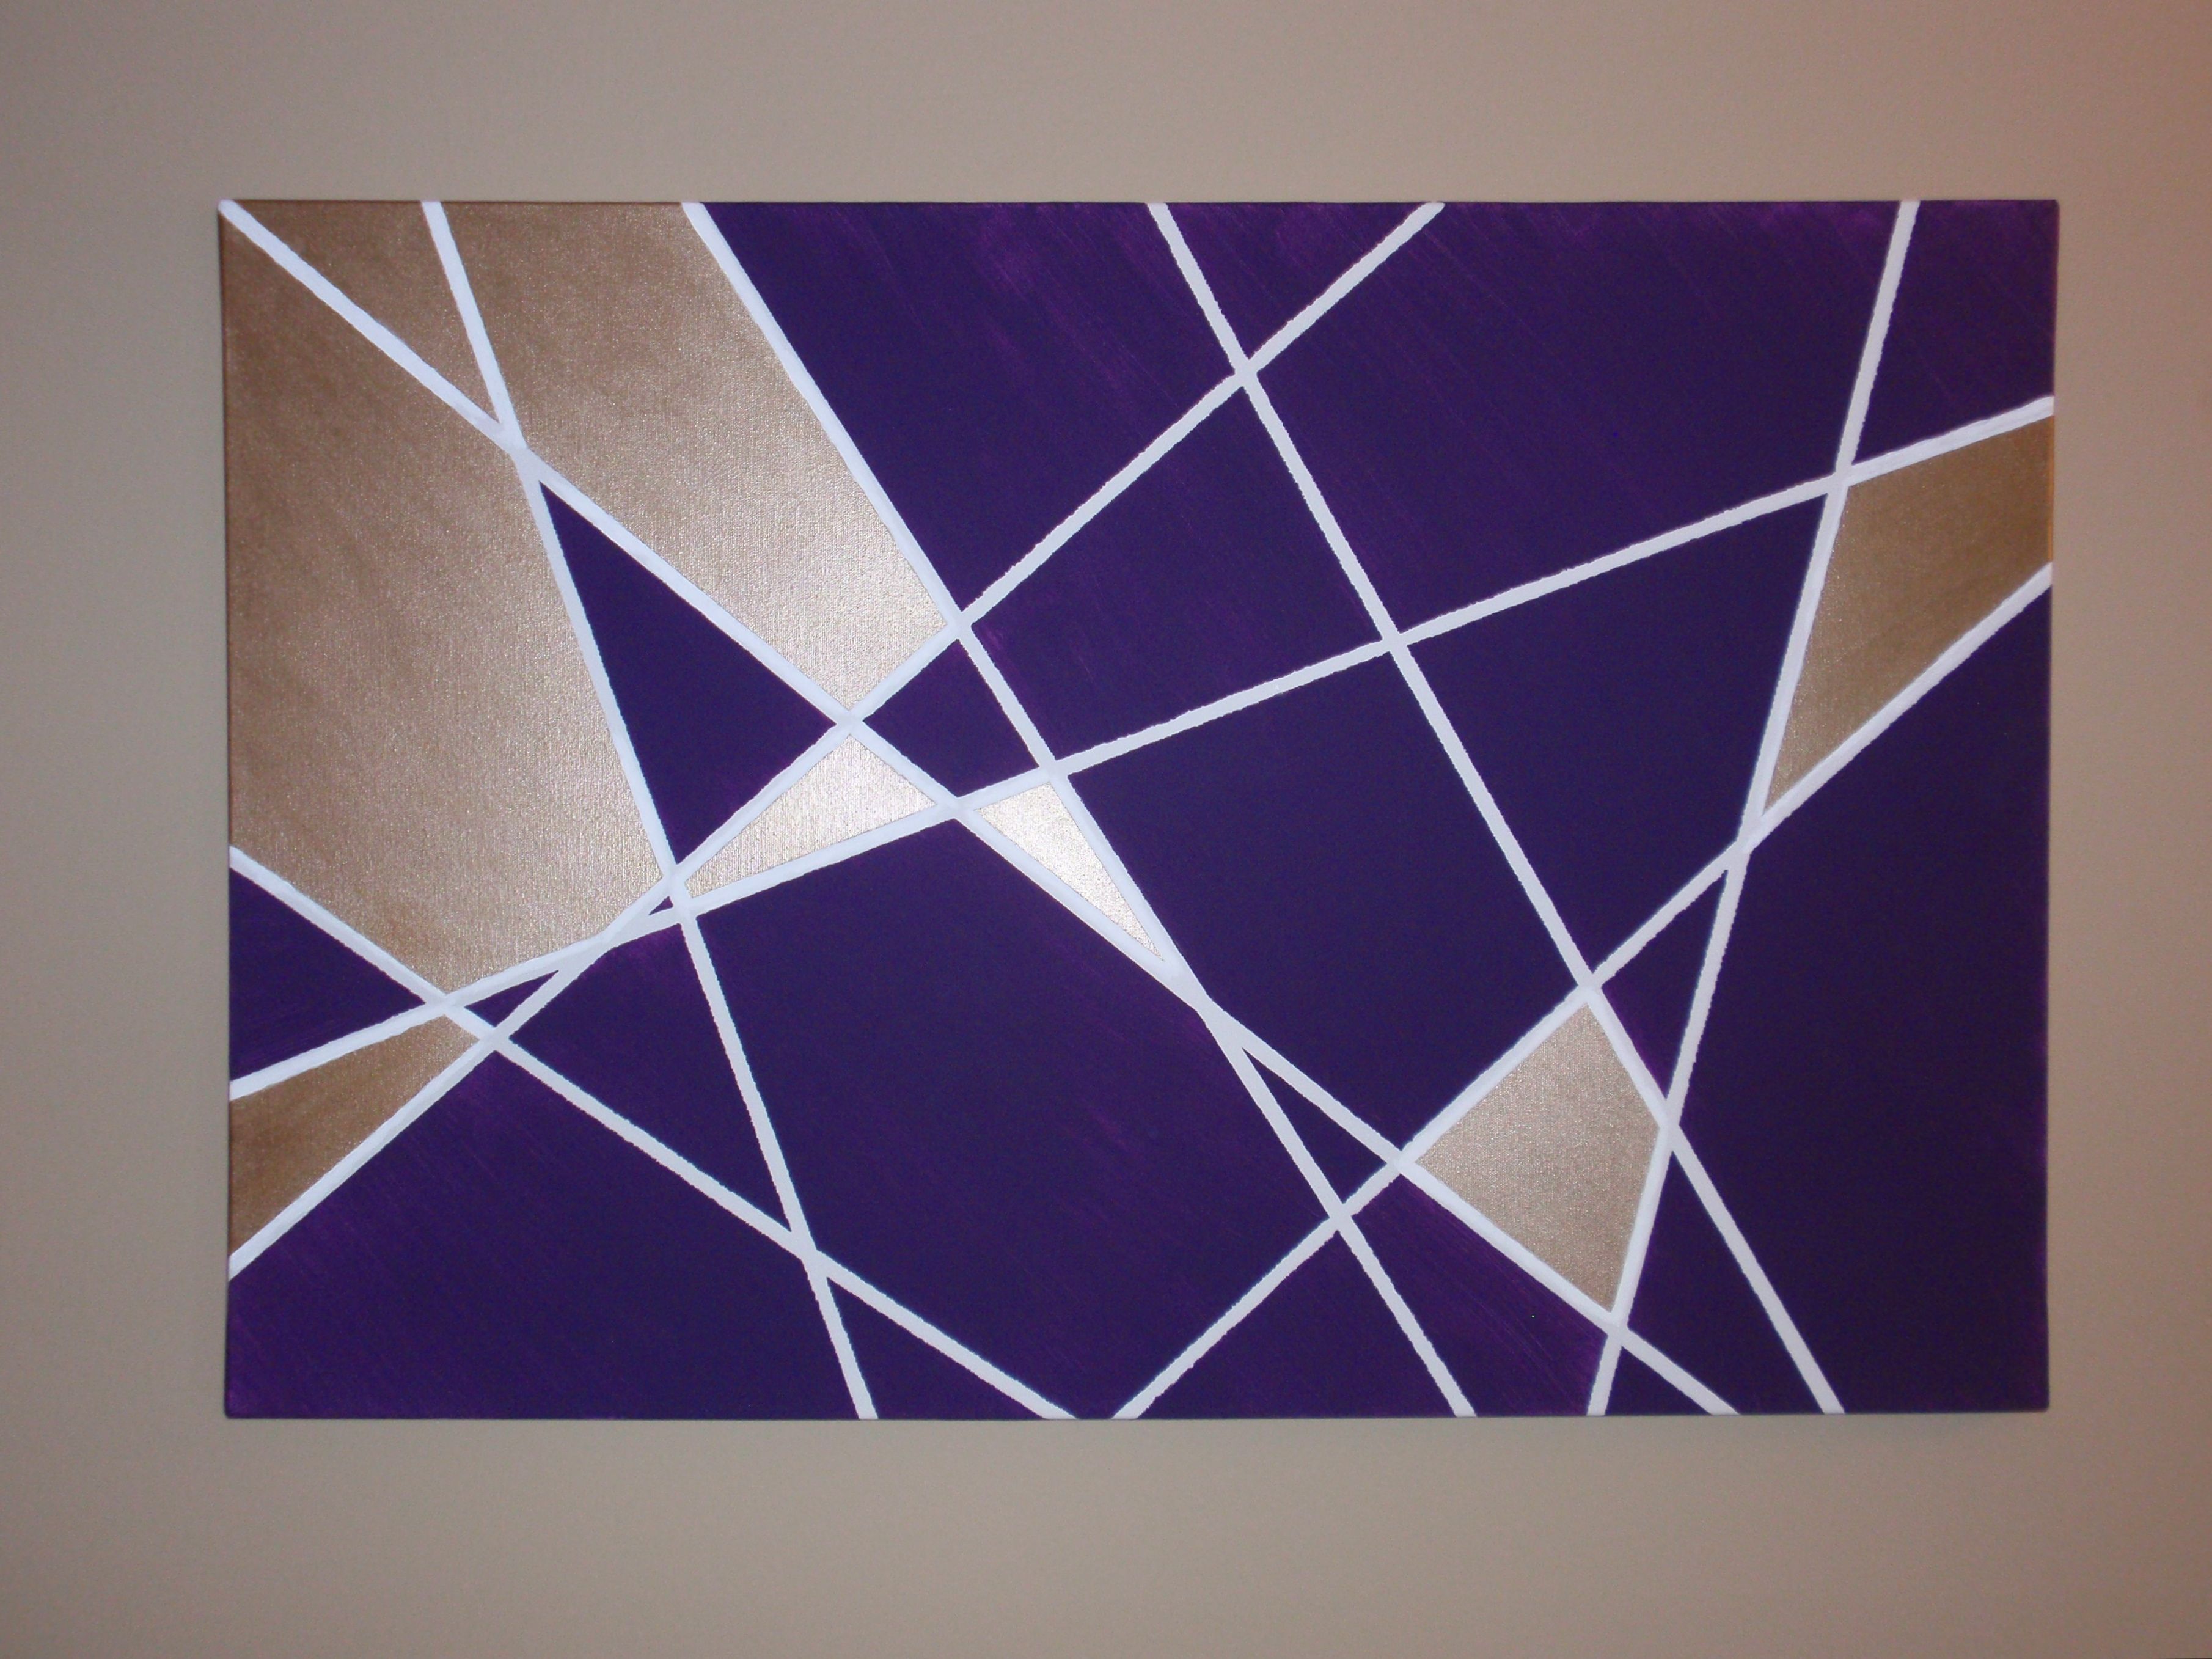 Geometric Wall Art Diy | Spring Board Of Ideas | Pinterest With Geometric Wall Art (View 3 of 20)